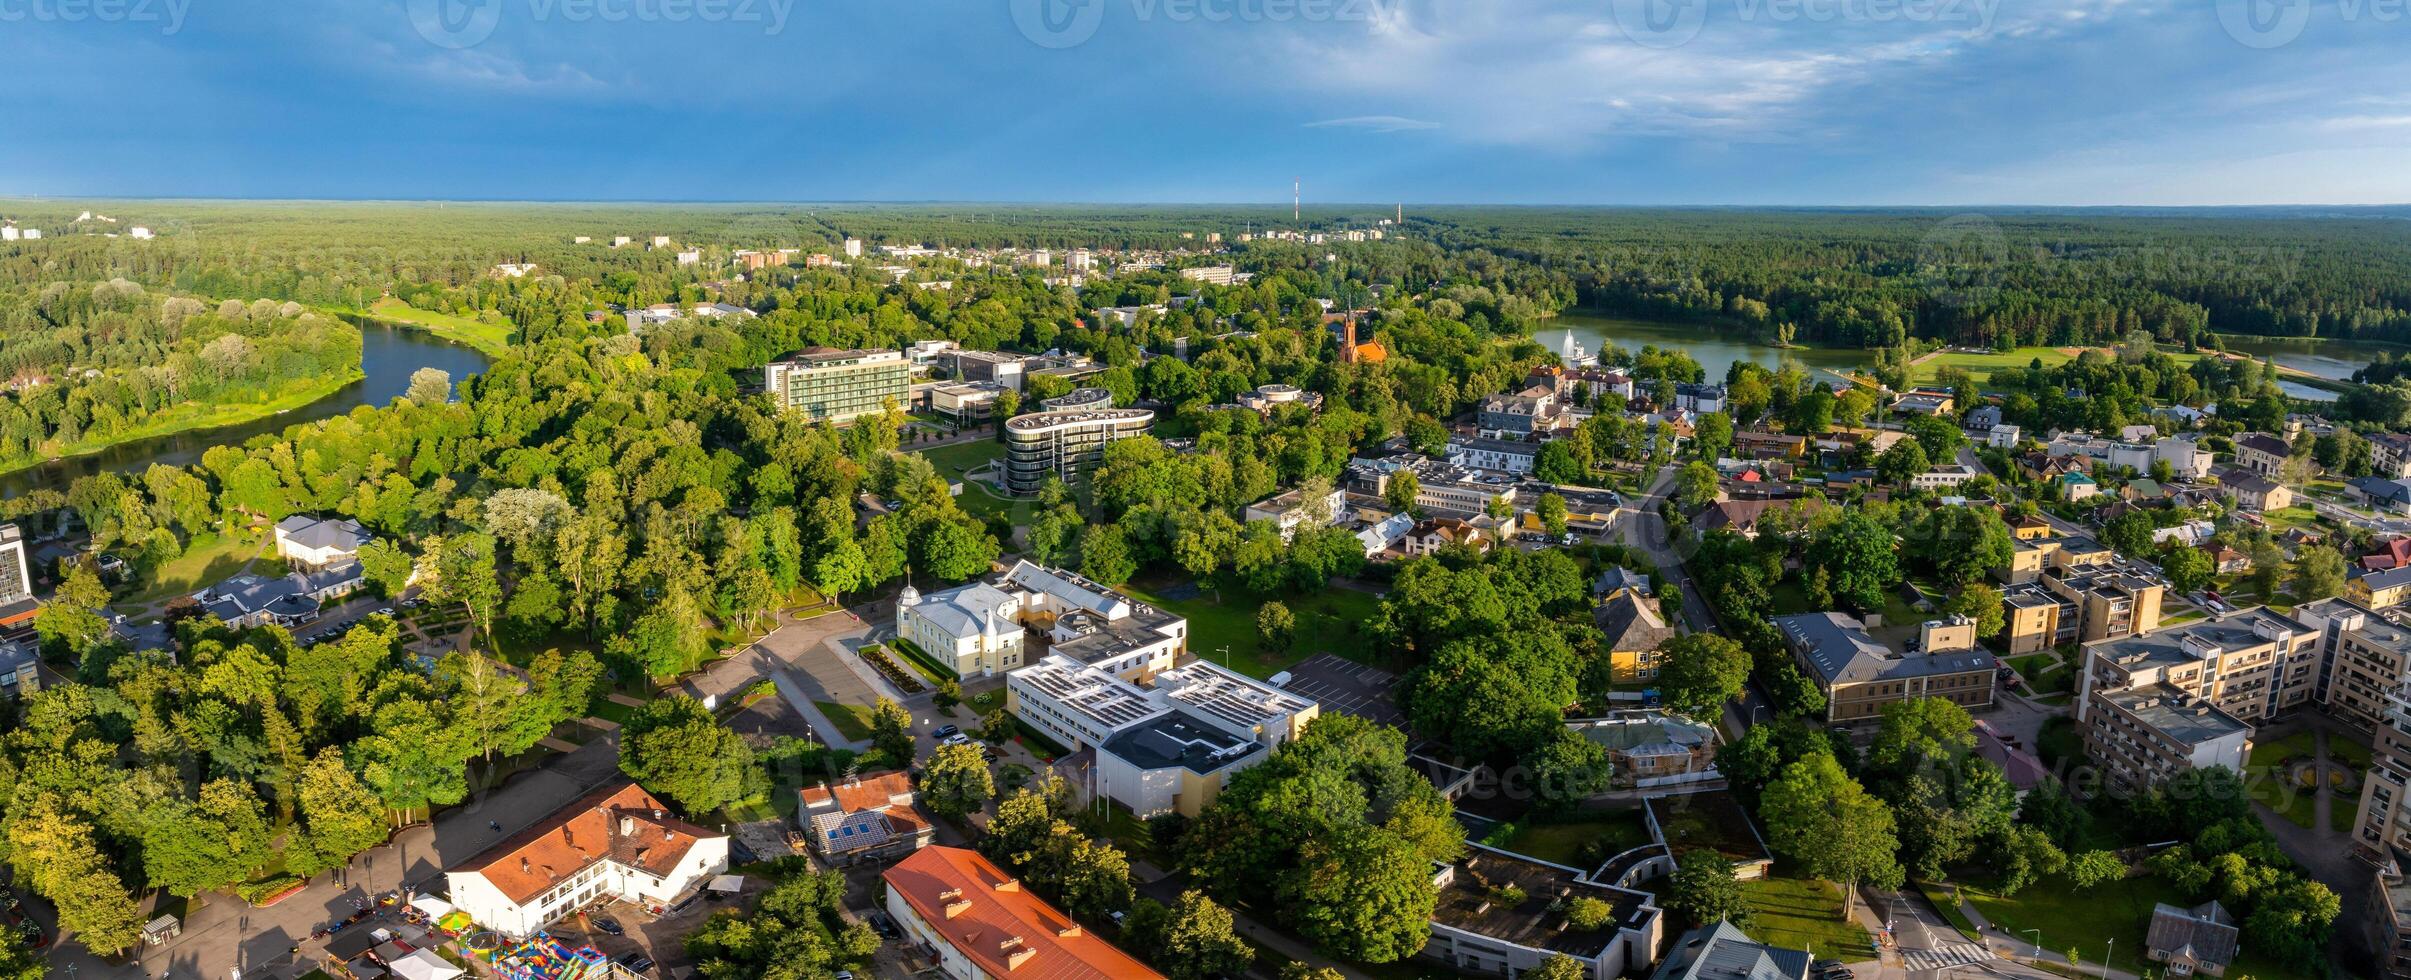 antenne panoramisch visie van Litouws toevlucht druskininkai foto